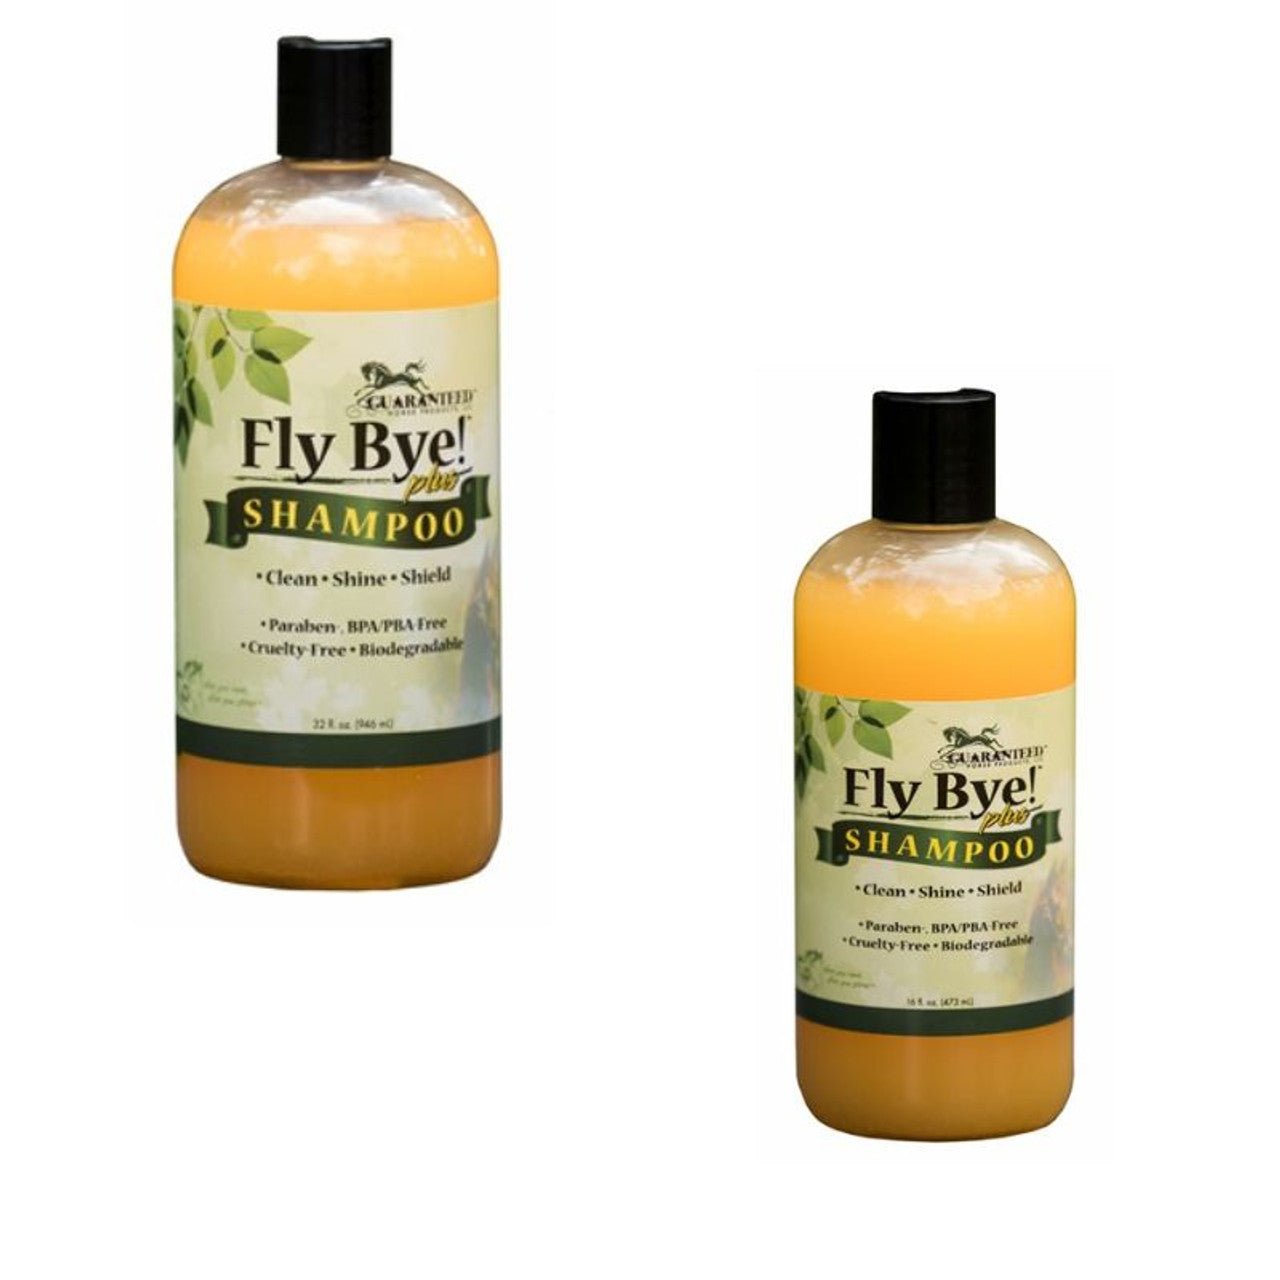 Fly Bye! Plus Shampoo-TexanSaddles.com